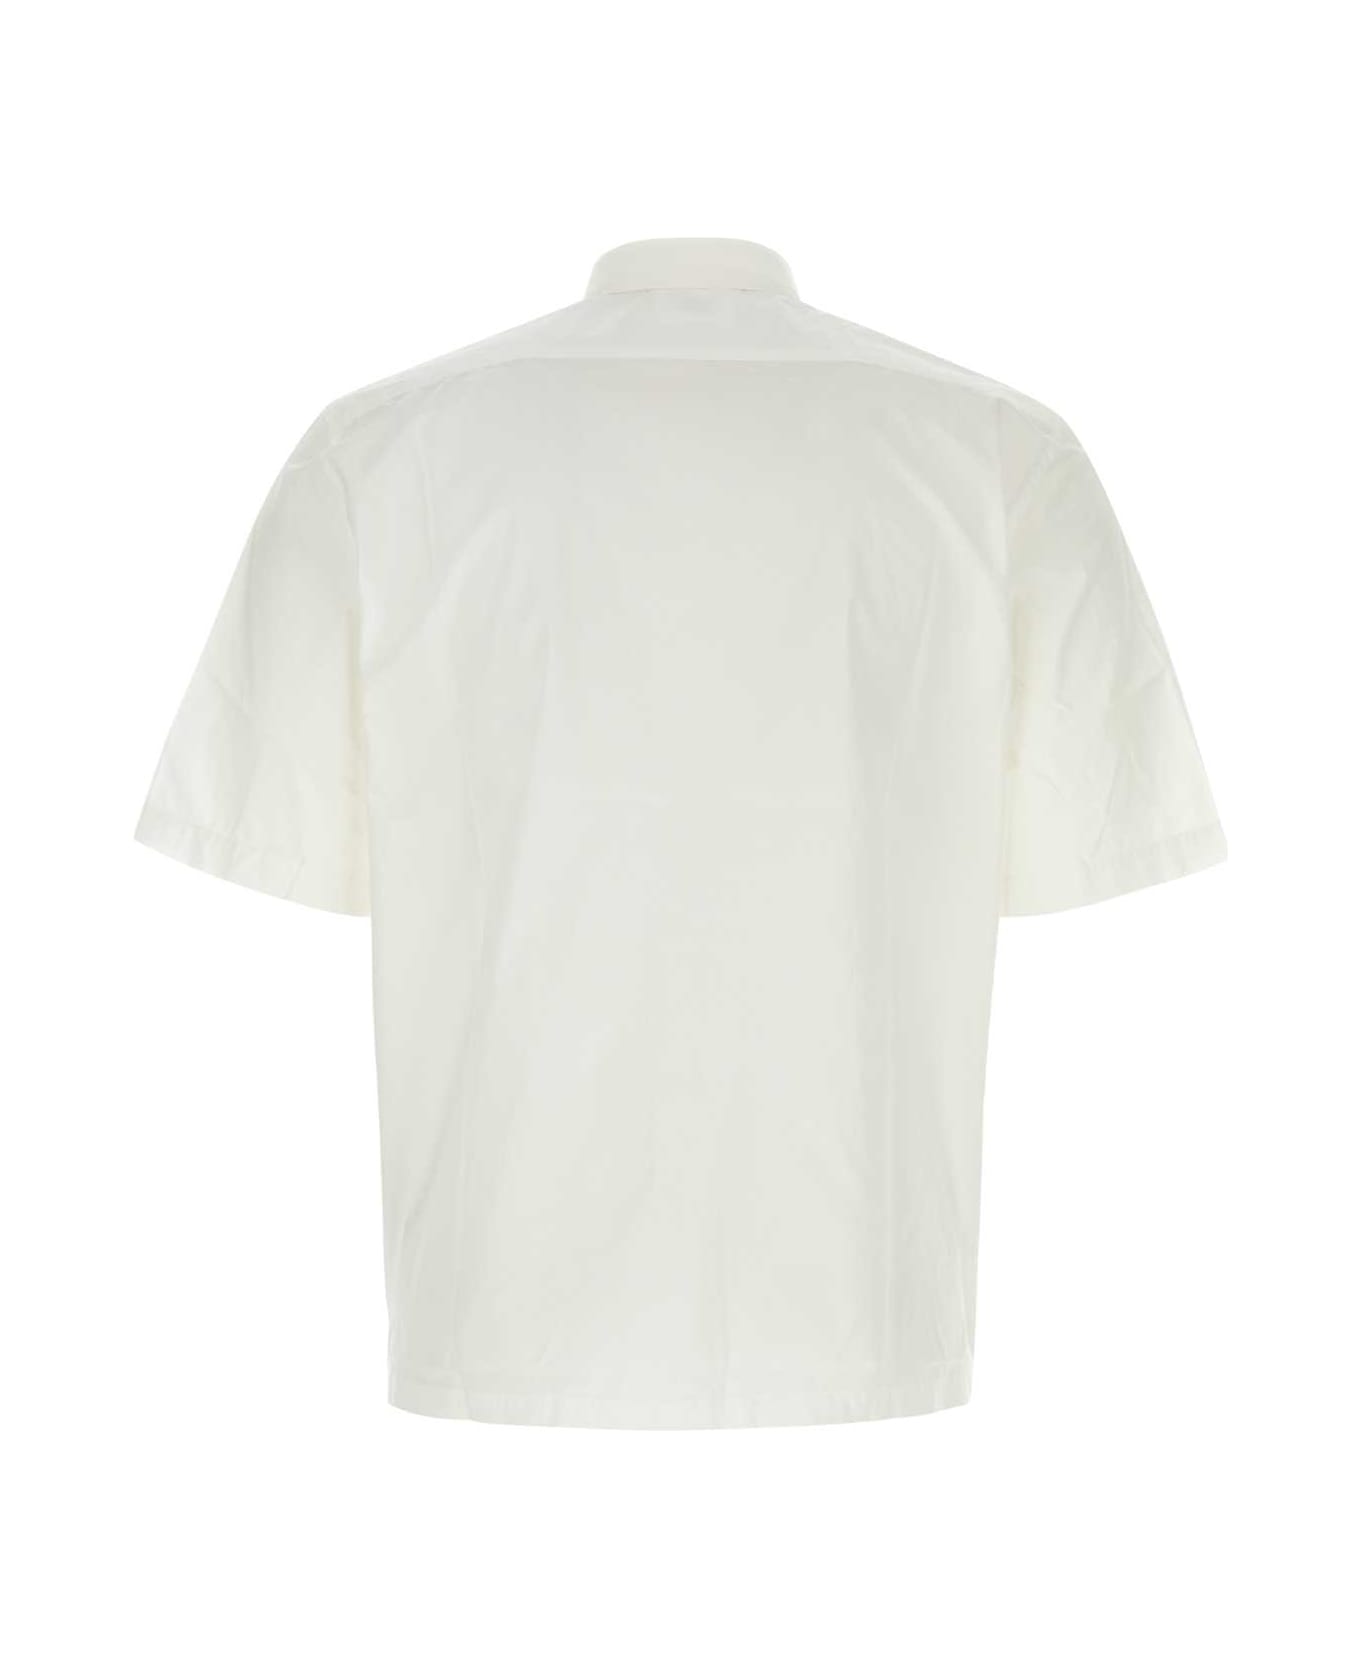 C.P. Company White Cotton Shirt - GAUZEWHITE